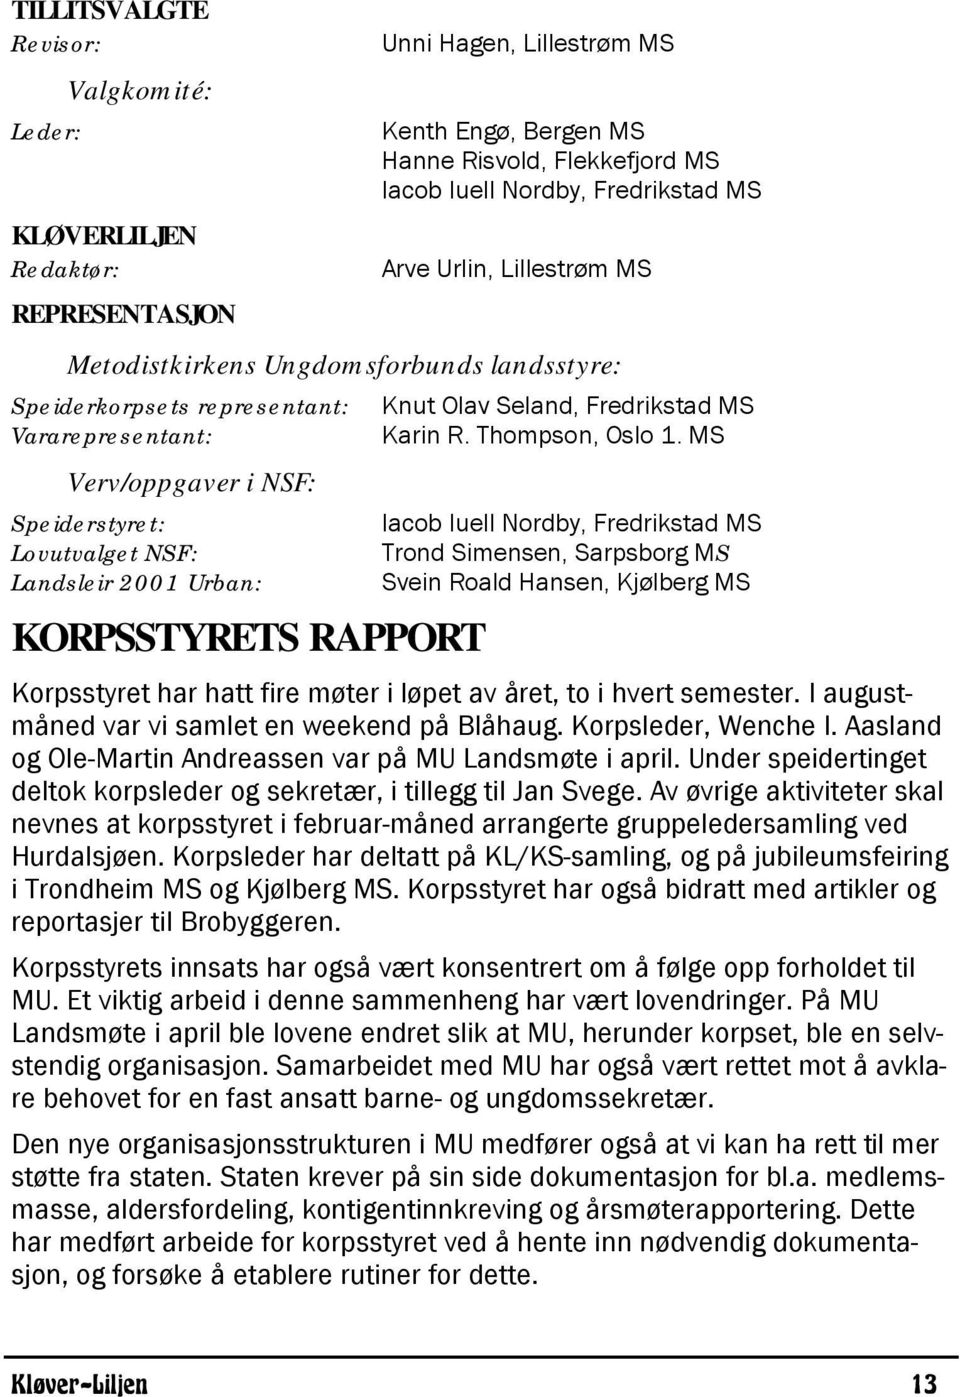 KORPSSTYRETS RAPPORT Knut Olav Seland, Fredrikstad MS Karin R. Thompson, Oslo 1.